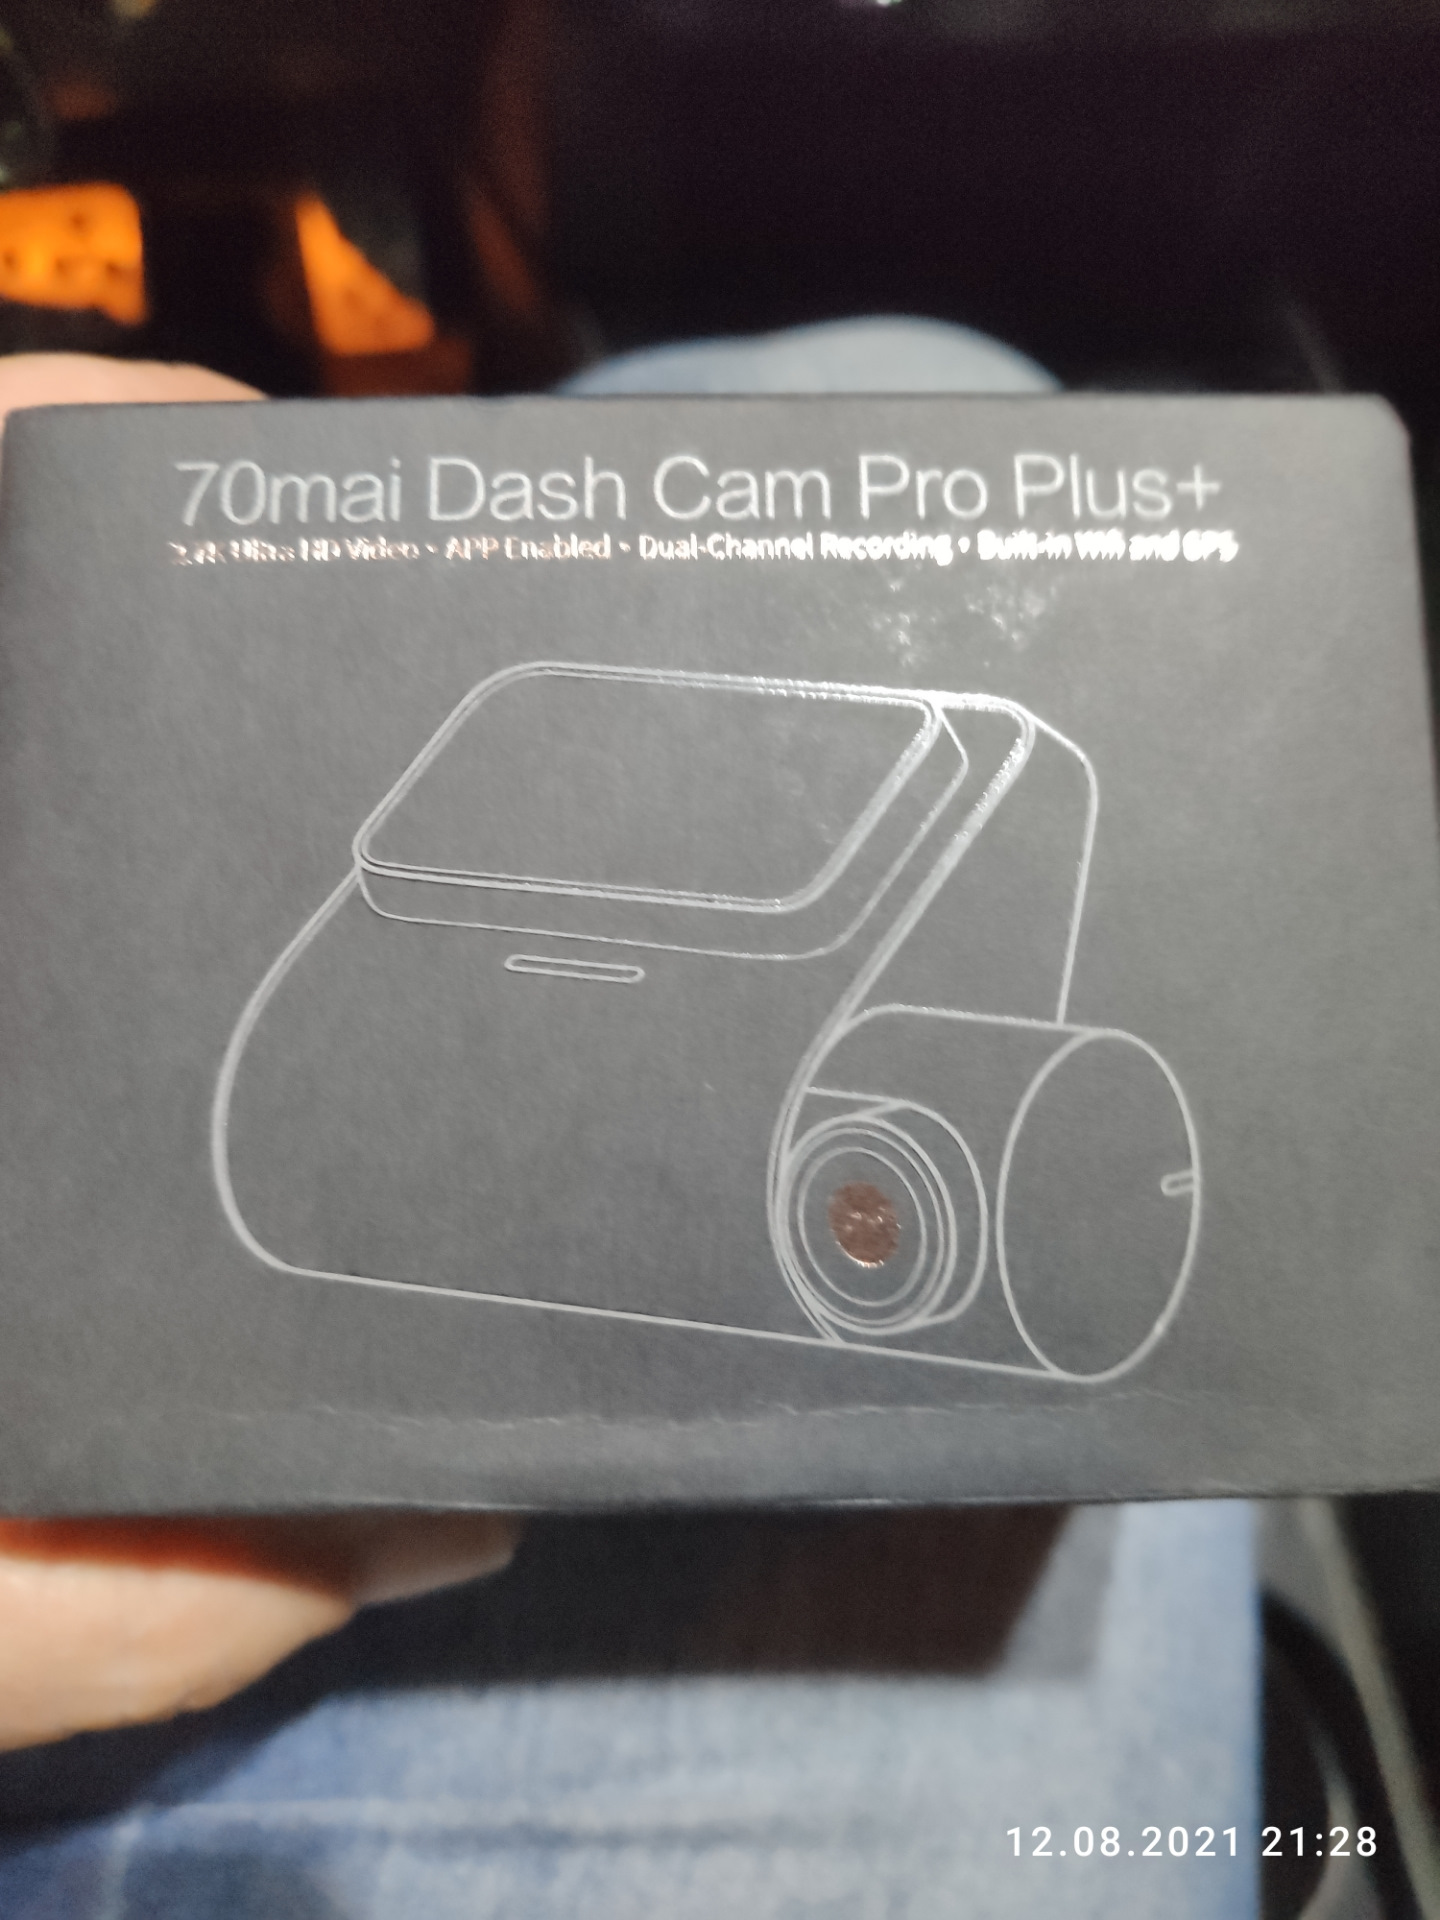 70mai a500s pro plus купить. 70mai a500s Dash cam Pro Plus+. Наклейка на стекло видеорегистратор 70mai Dash cam Pro Plus+, черный. 70mai Dashcam Pro Plus+. 70mai Dash cam Pro Plus+ в машине.